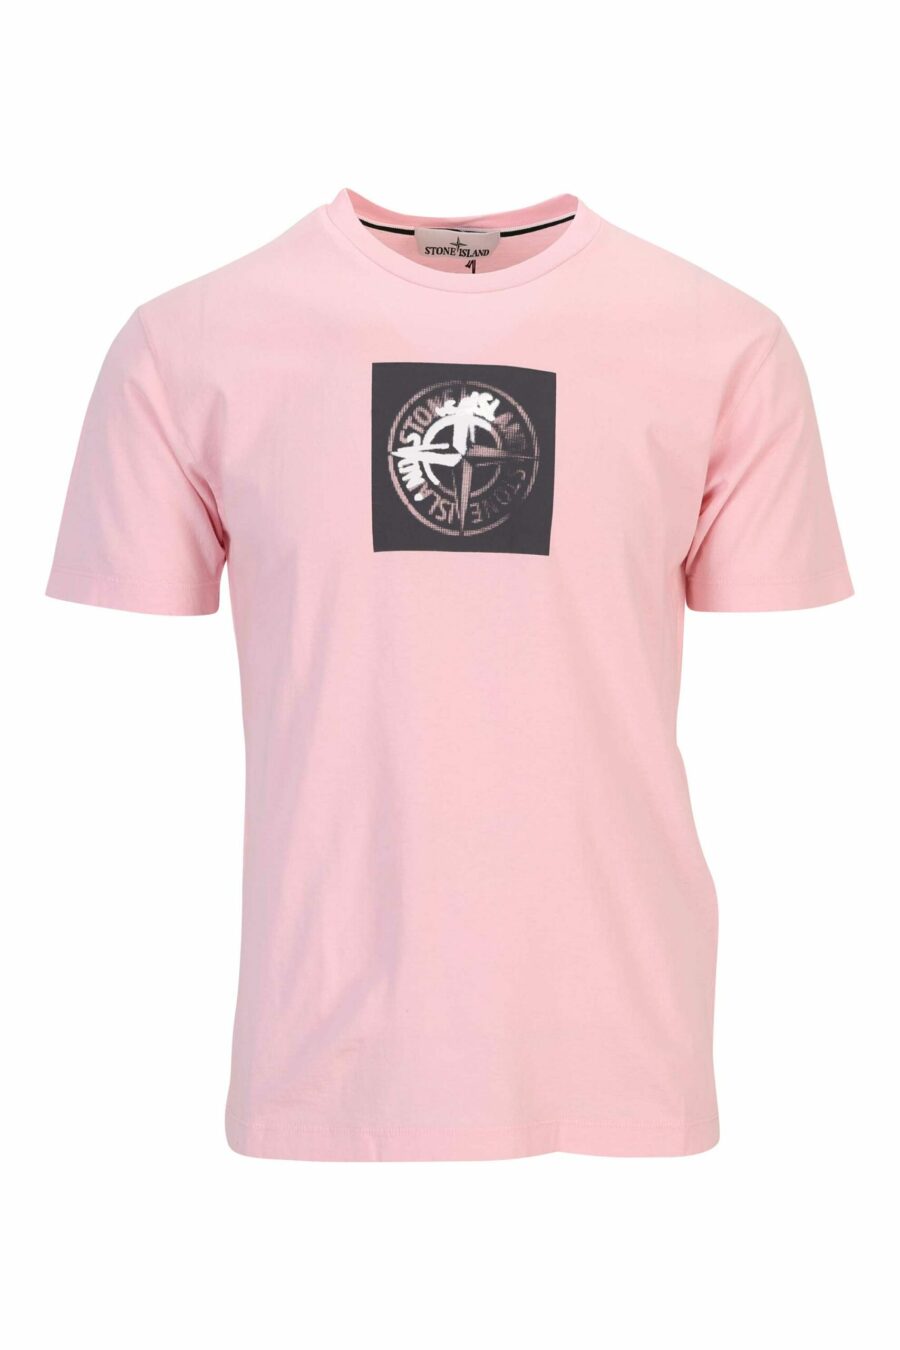 Rosa T-Shirt mit Kompass-Logo-Aufdruck - 8052572903991 skaliert